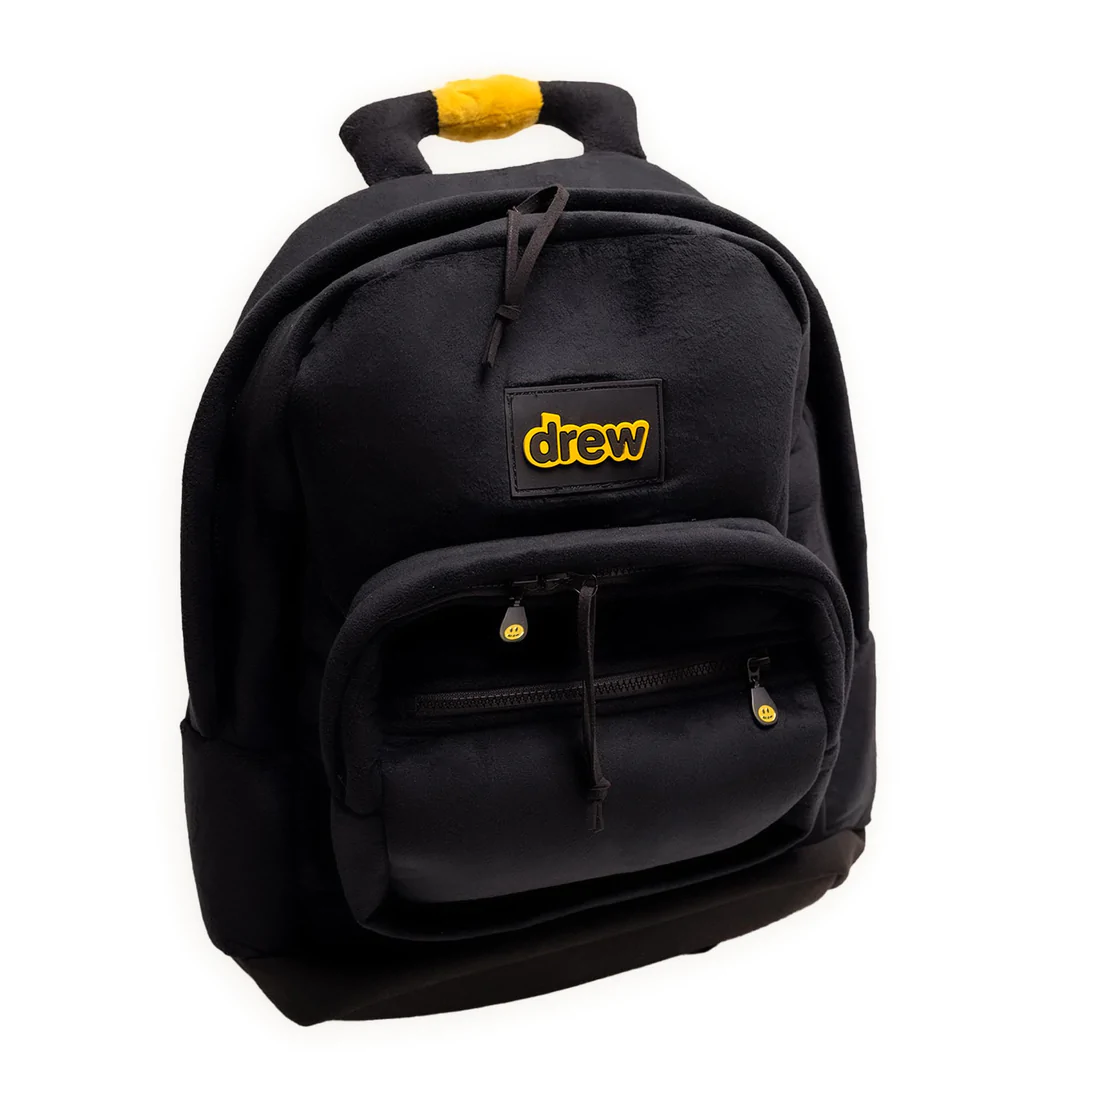 plush backpack black